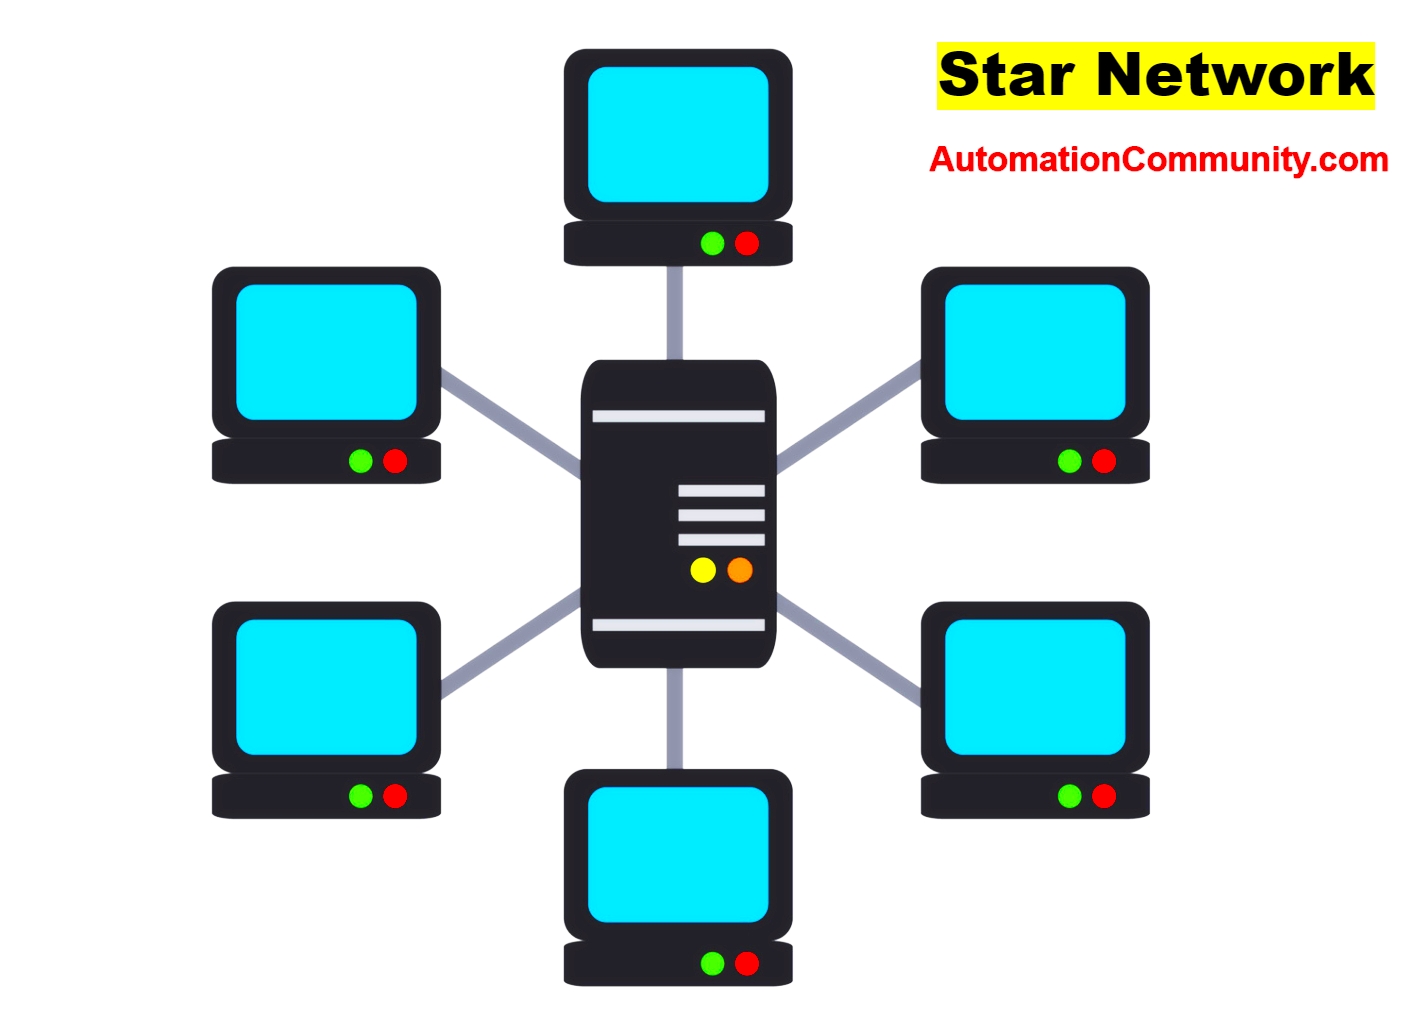 Star Network Topology